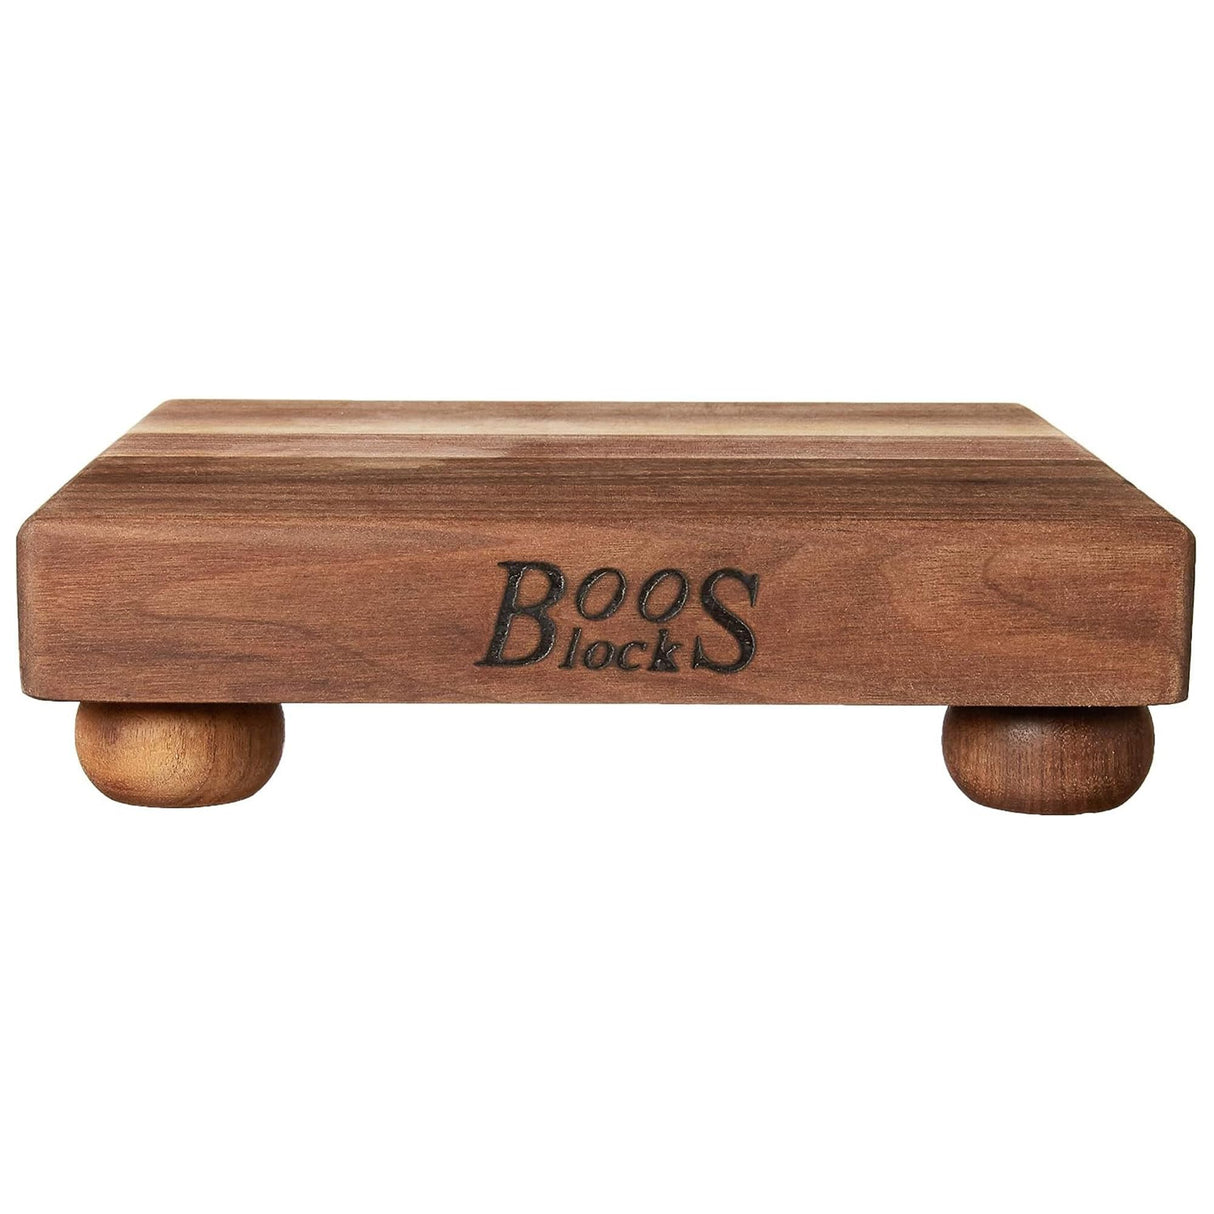 John Boos WAL-B9S Small Walnut Wood Cutting Board for Kitchen Prep 9 x Inches, 1.5 Inch Thick Edge Grain Square Charcuterie Block with Wooden Bun Feet 09X09X1.5 WAL-EDGE GR WAL BUN FT